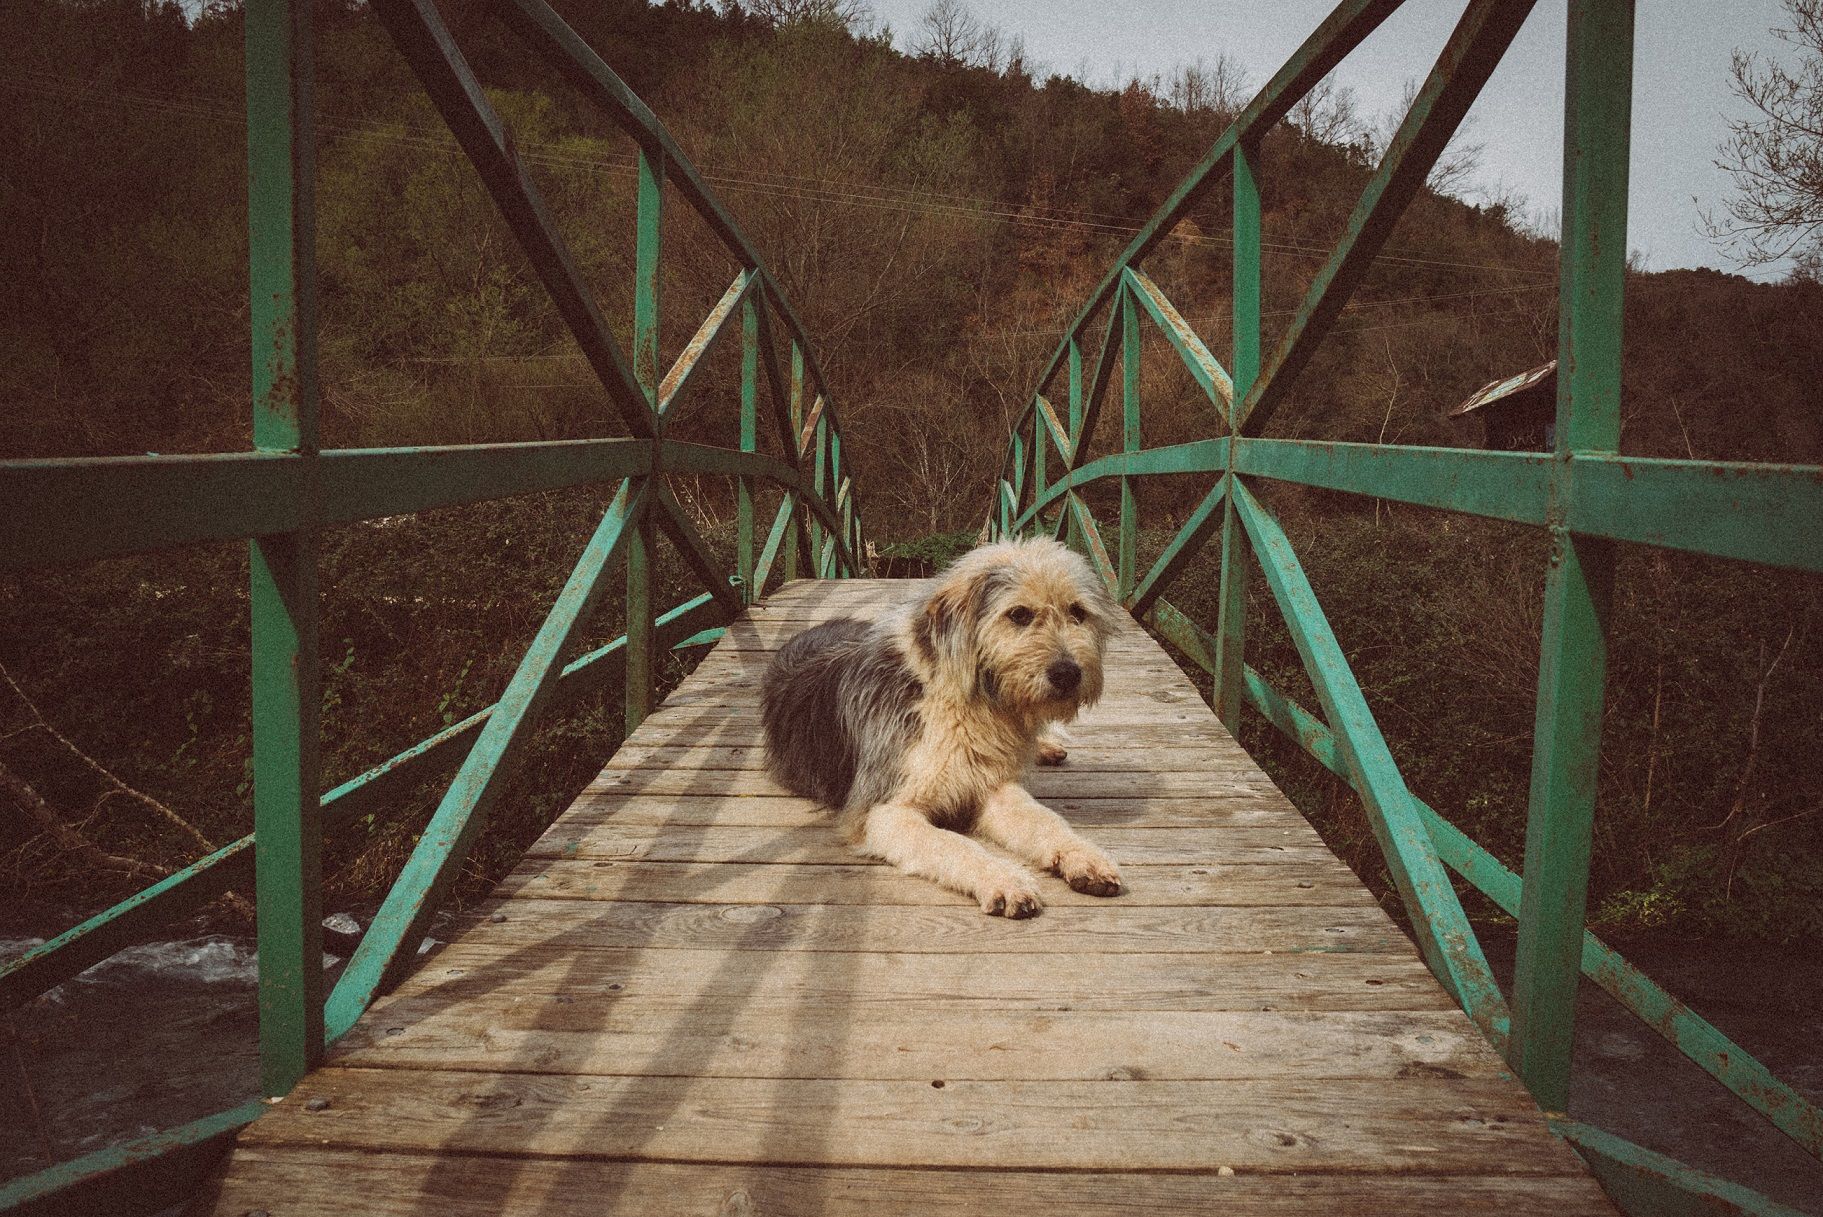 A dog on a bridge in Albania.